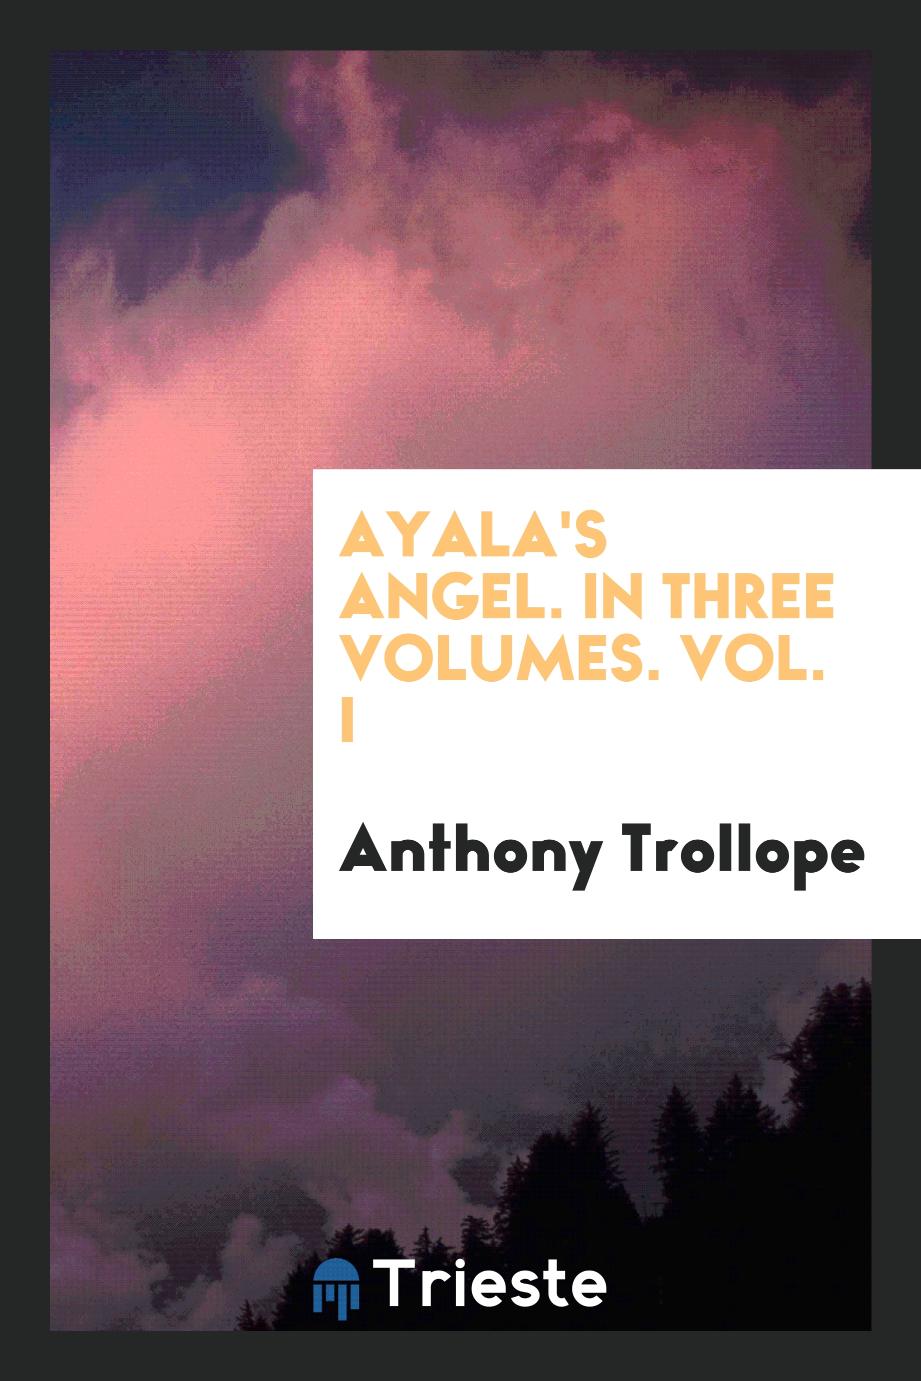 Anthony Trollope - Ayala's angel. In three volumes. Vol. I